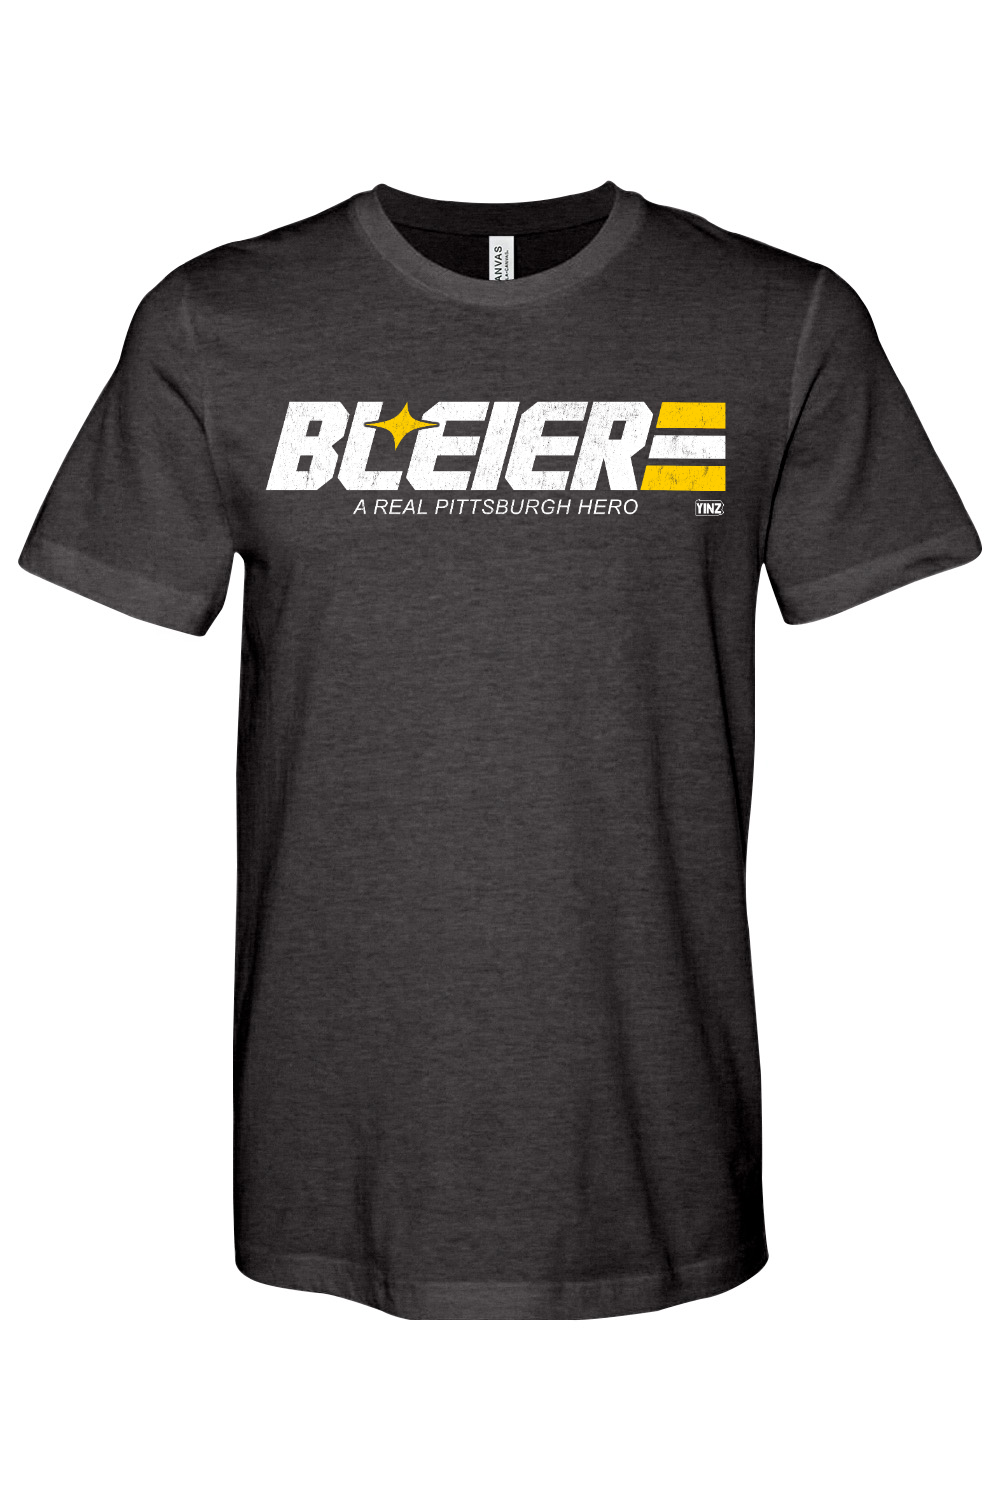 Bleier - A Real Pittsburgh Hero - Yinzylvania